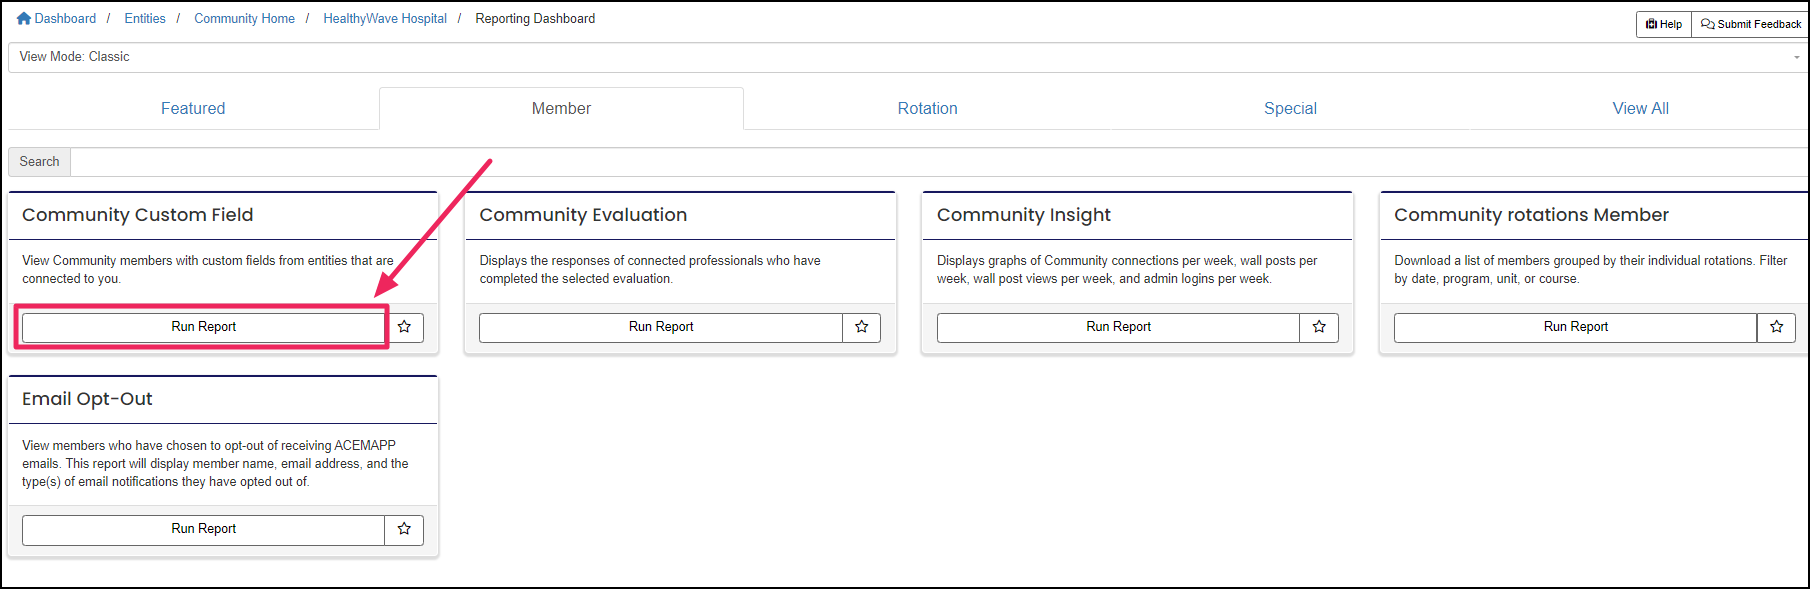 Image shows community custom field report under "Member."